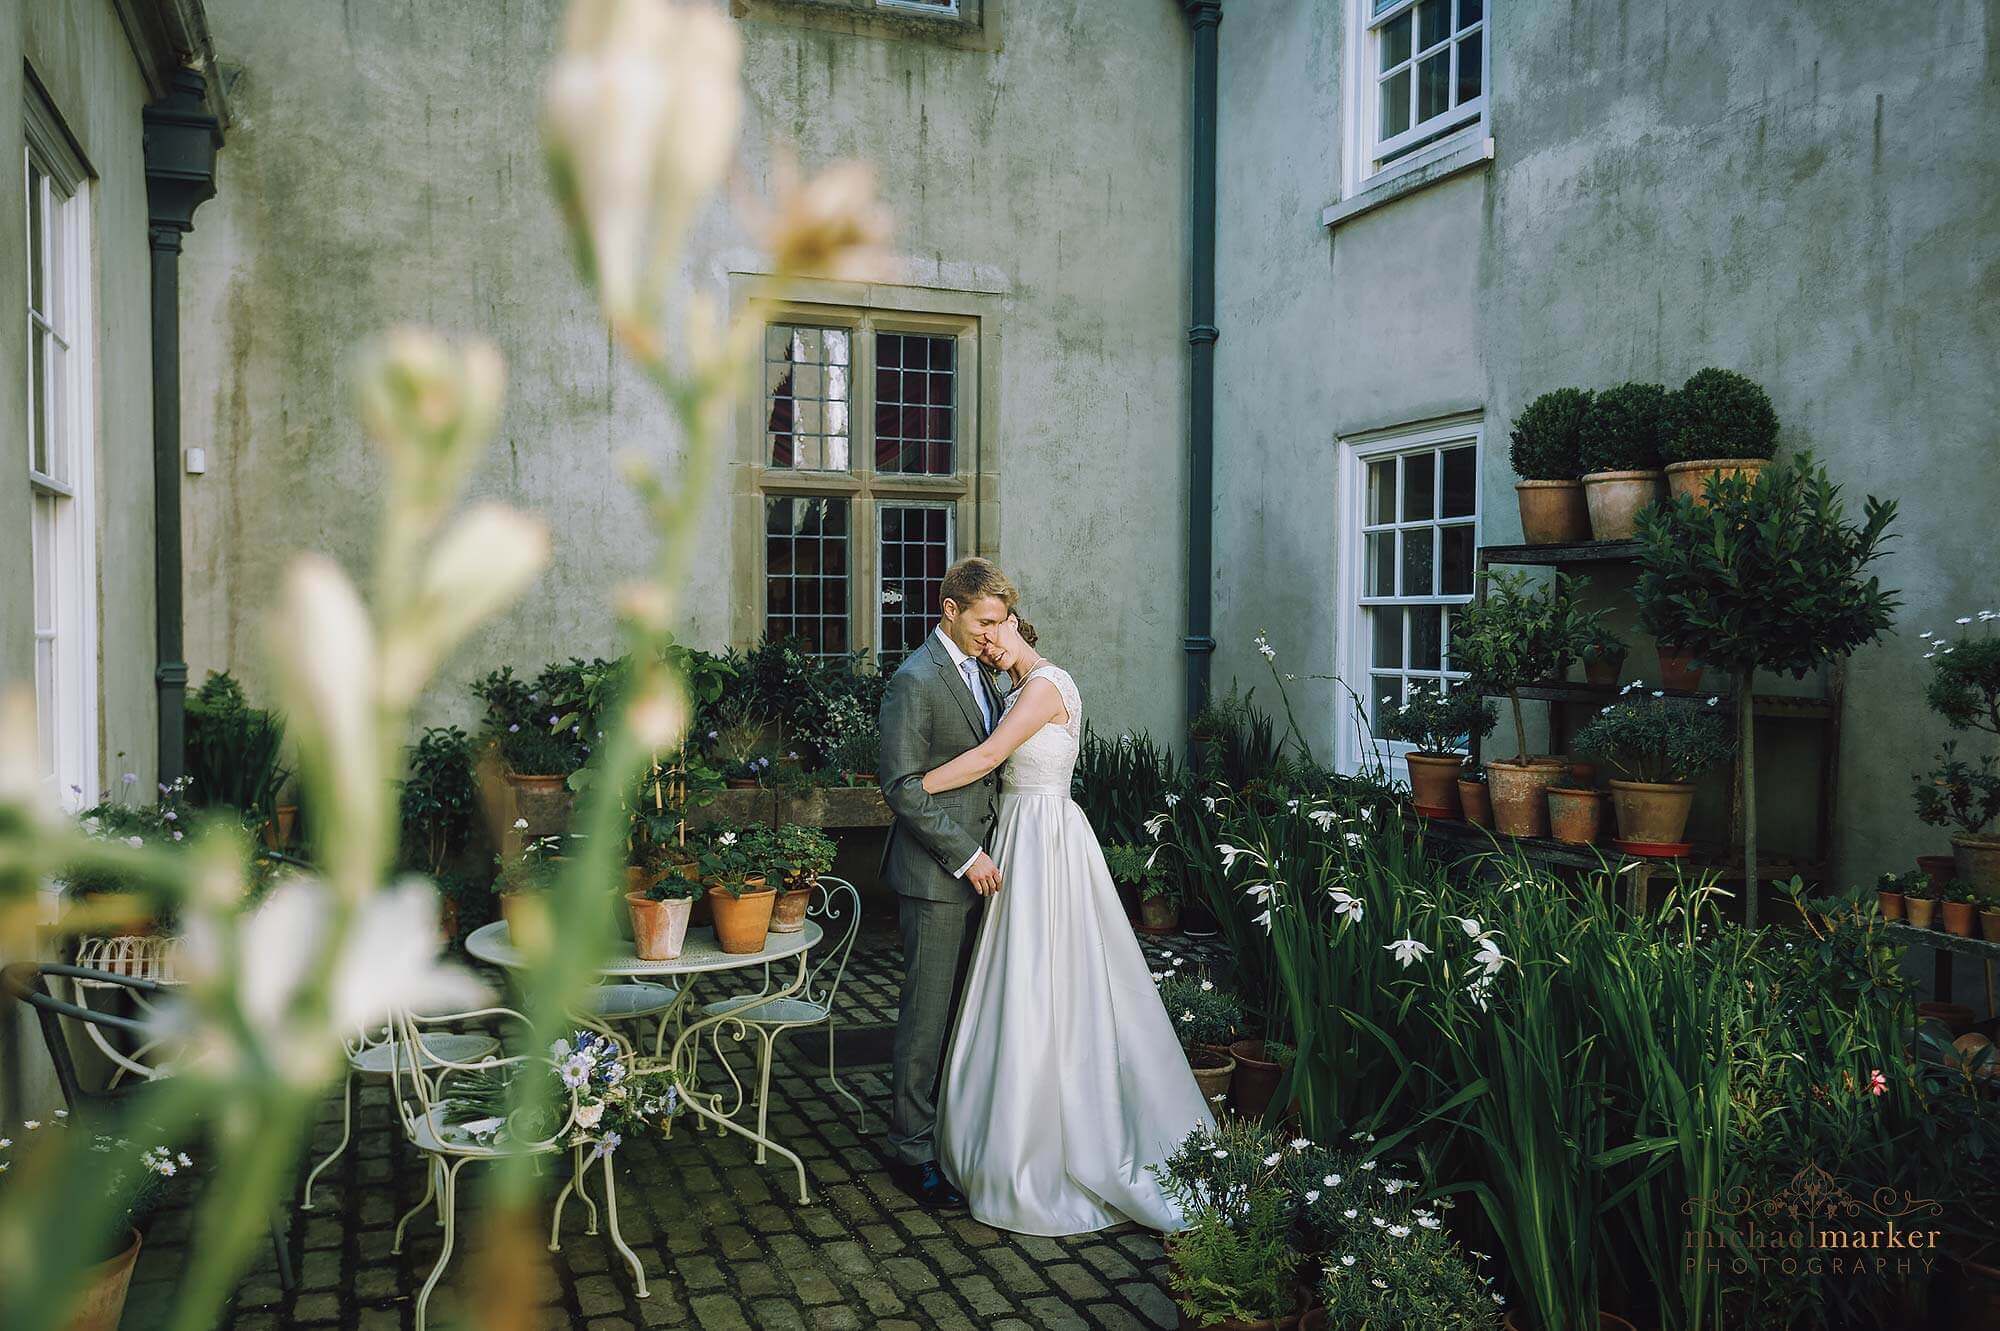 Bride and groom at beautiful Devon wedding venue Shilstone House courtyard.